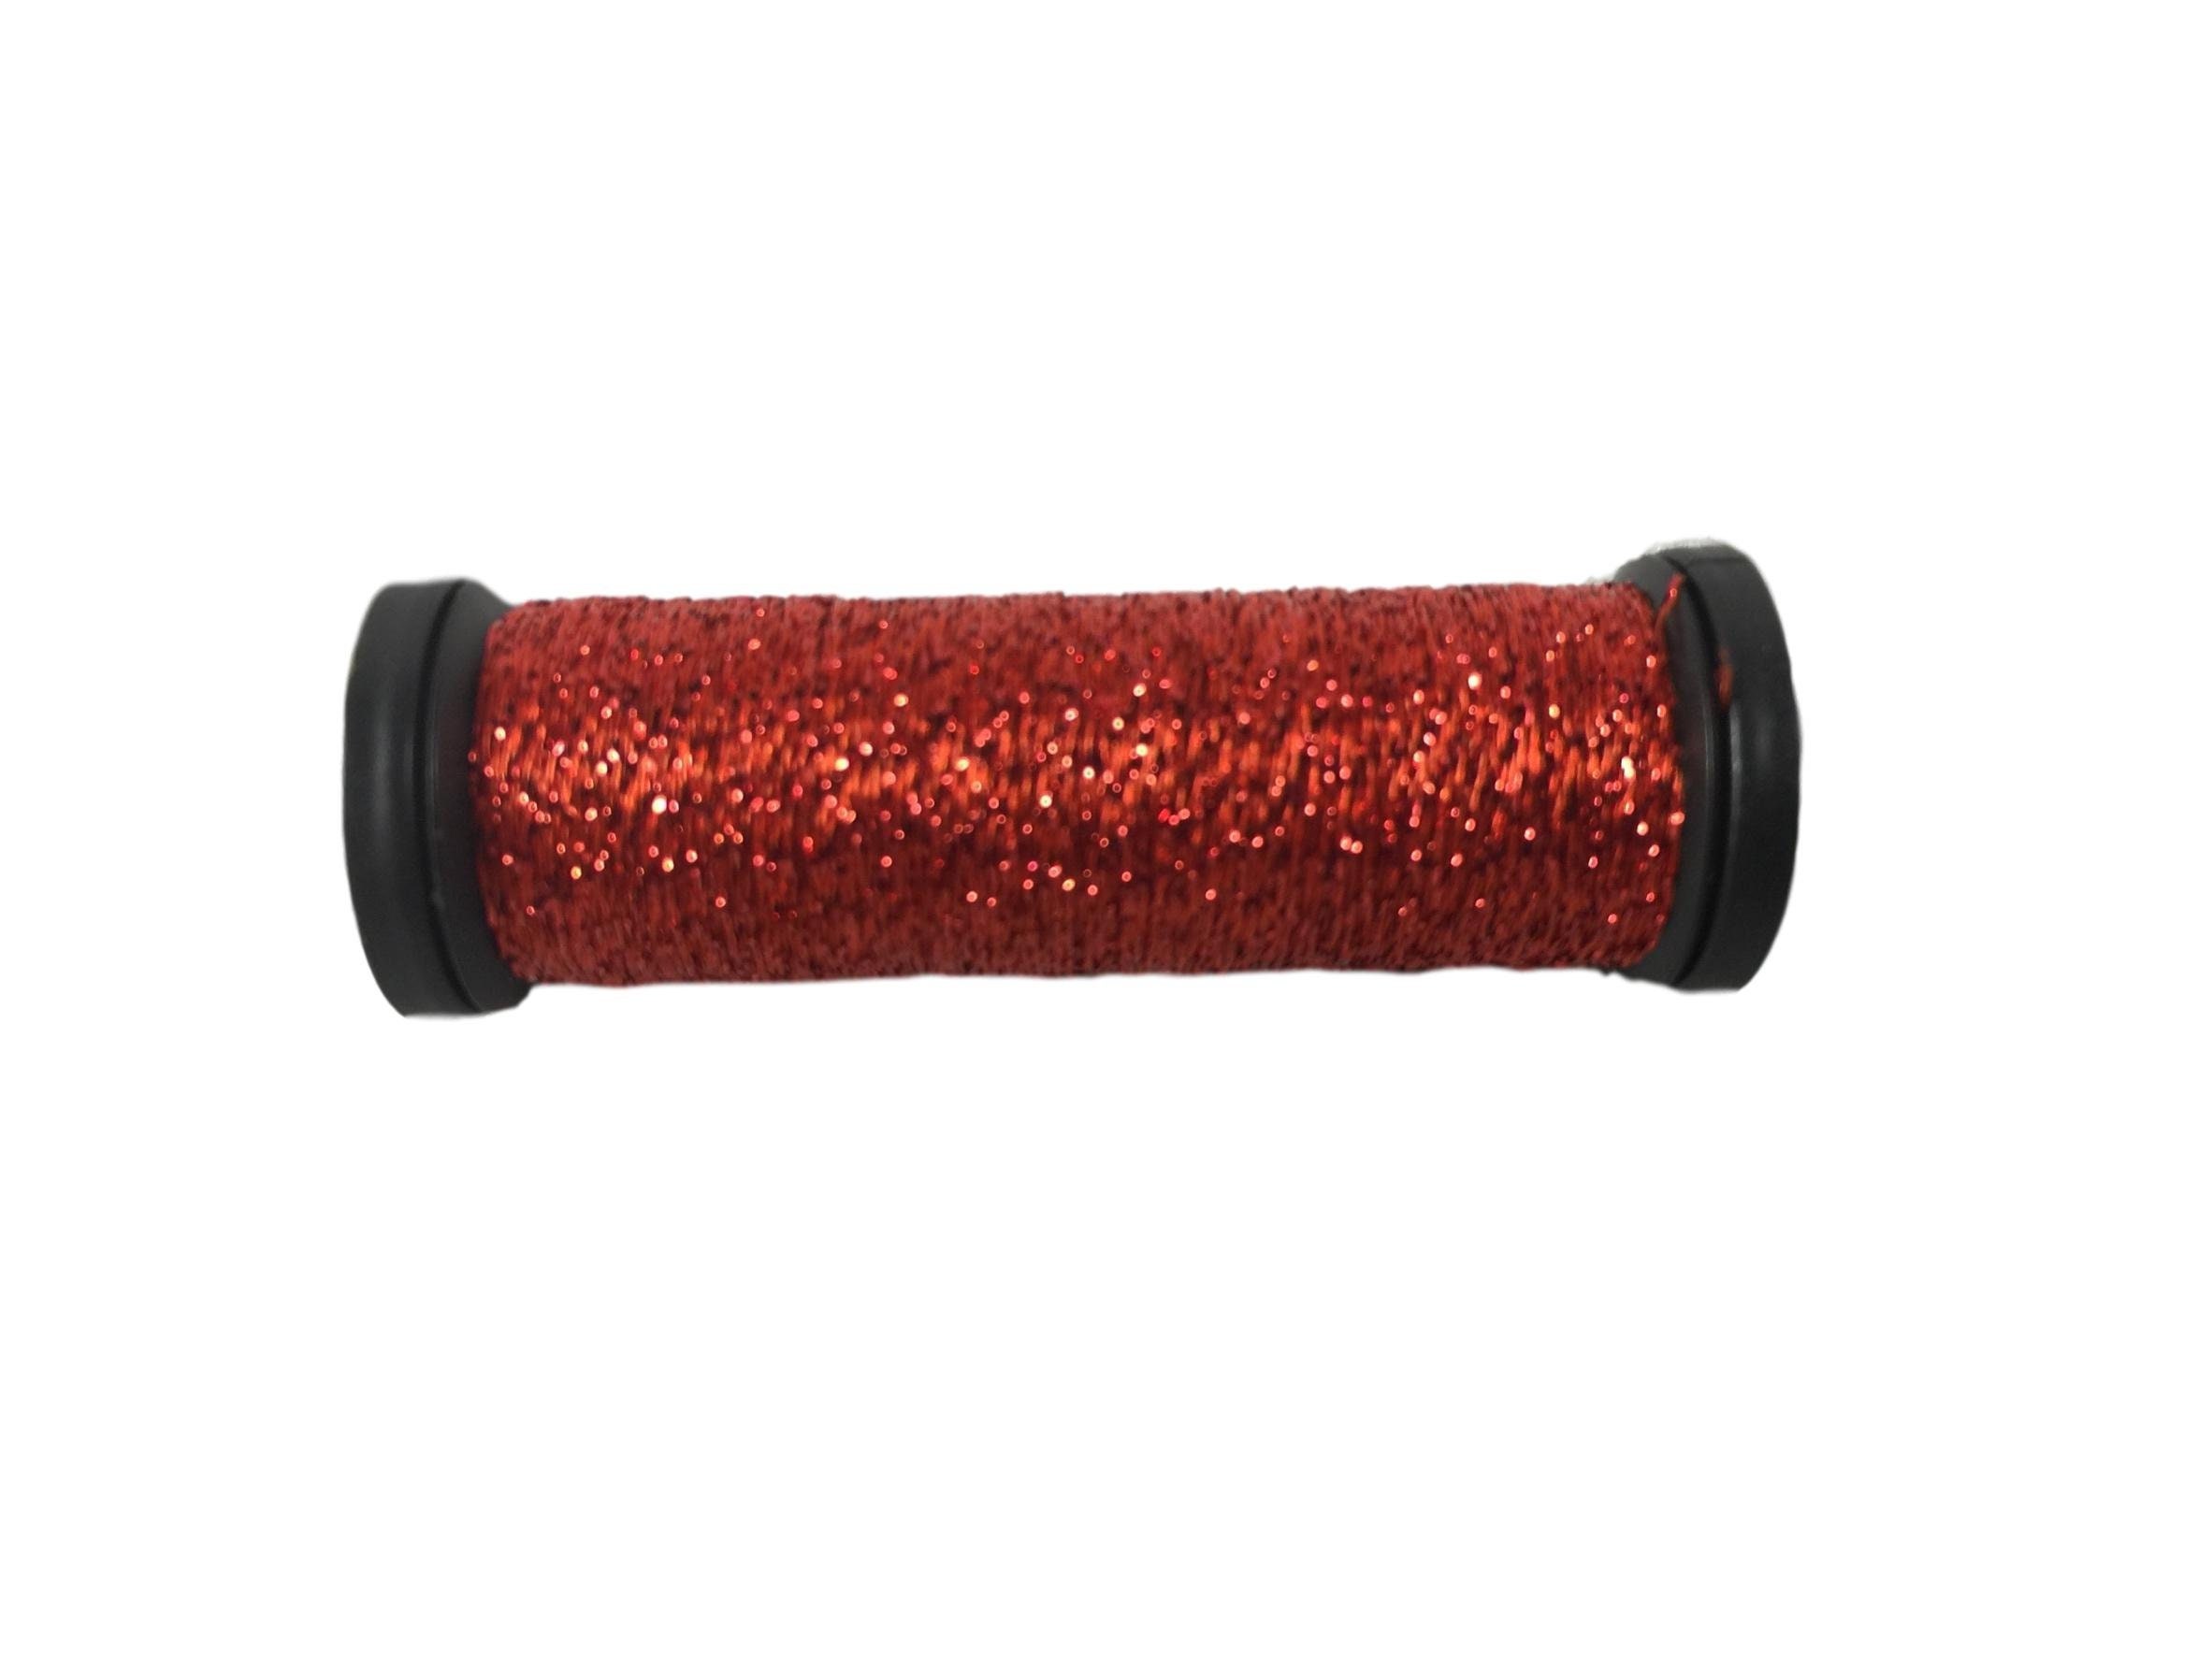 Red 003 Kreinik Metallics Blending Filament 50 Meters | 55 Yards - 1 Spool